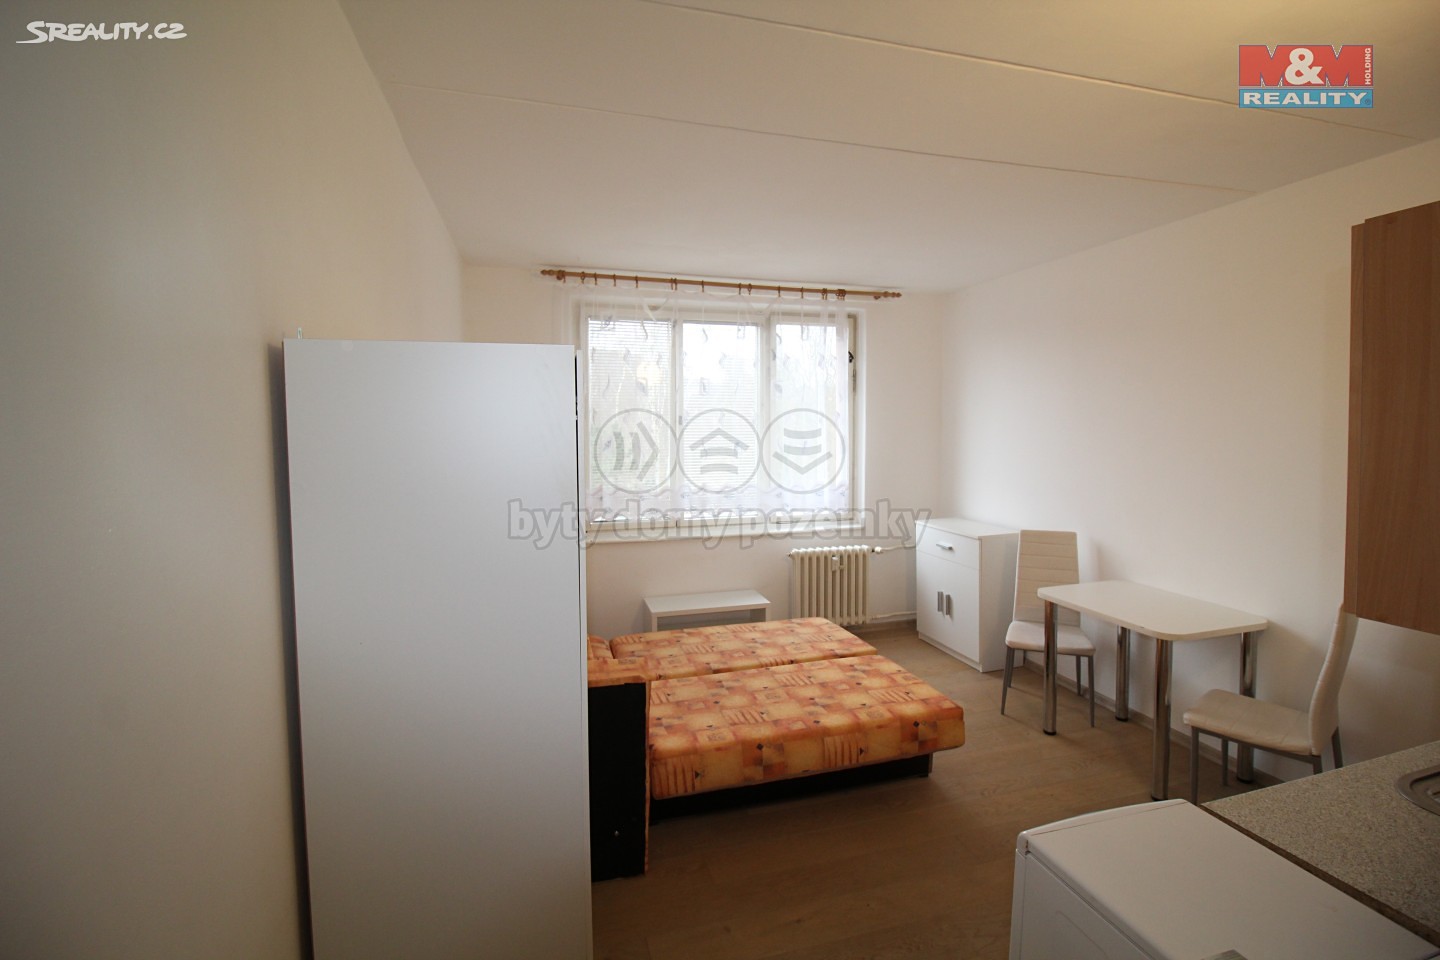 Prodej bytu 1+kk 43 m², Lomená, Karlovy Vary - Bohatice